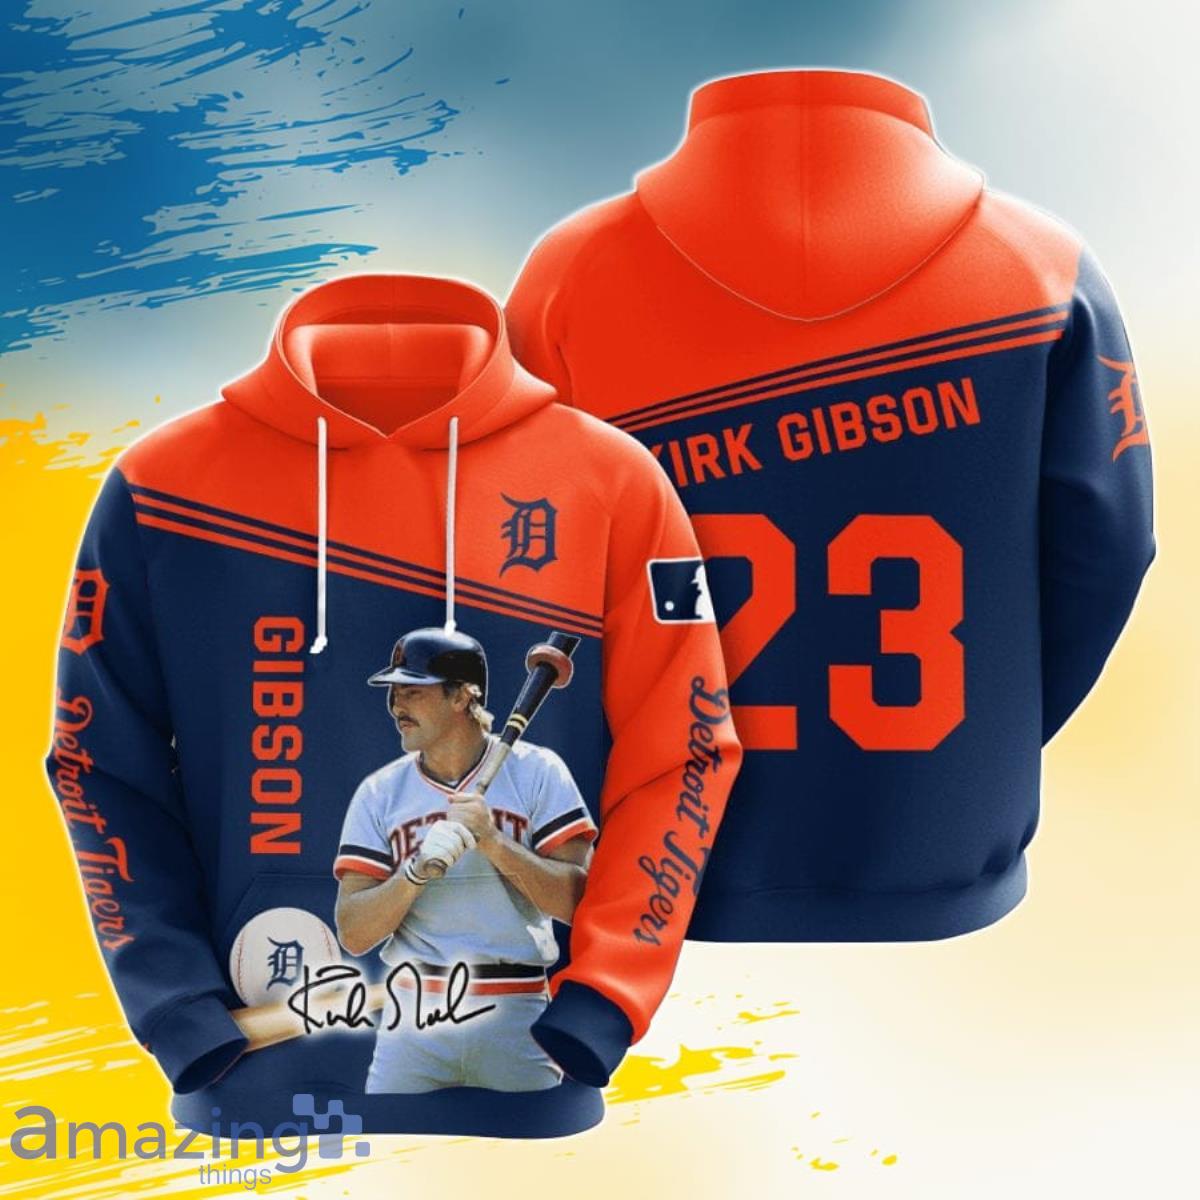 Vintage Detroit Tigers Kirk Gibson Throwback Baseball Jersey 